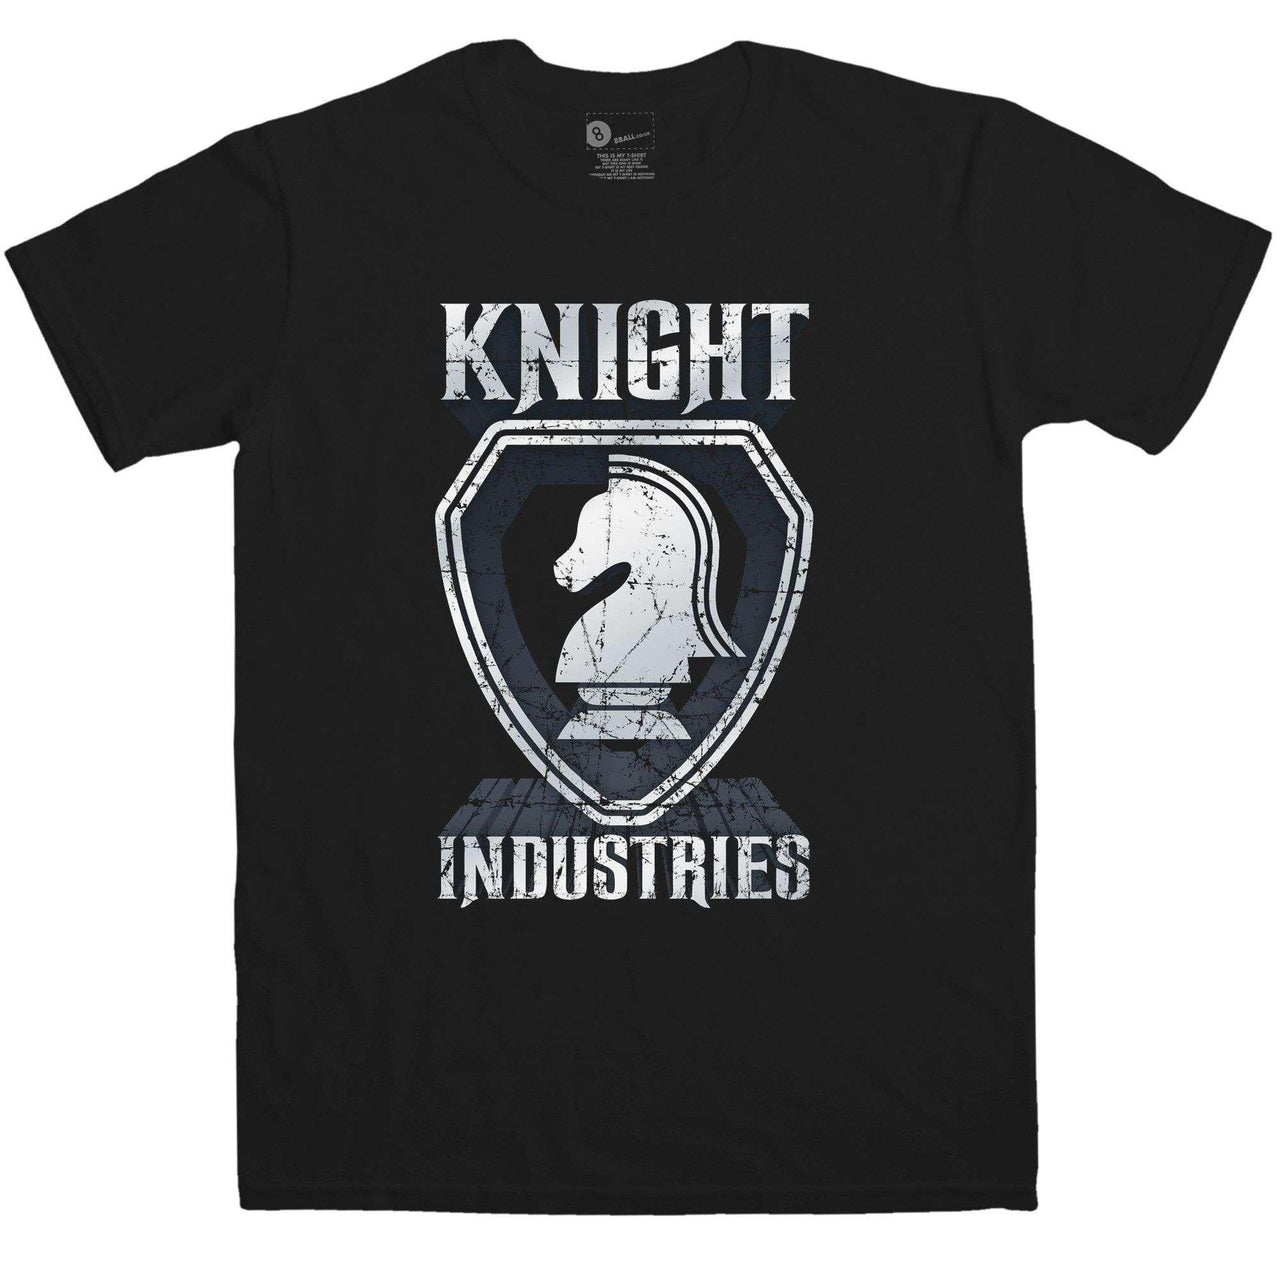 Knight Industries T-Shirt For Men 8Ball